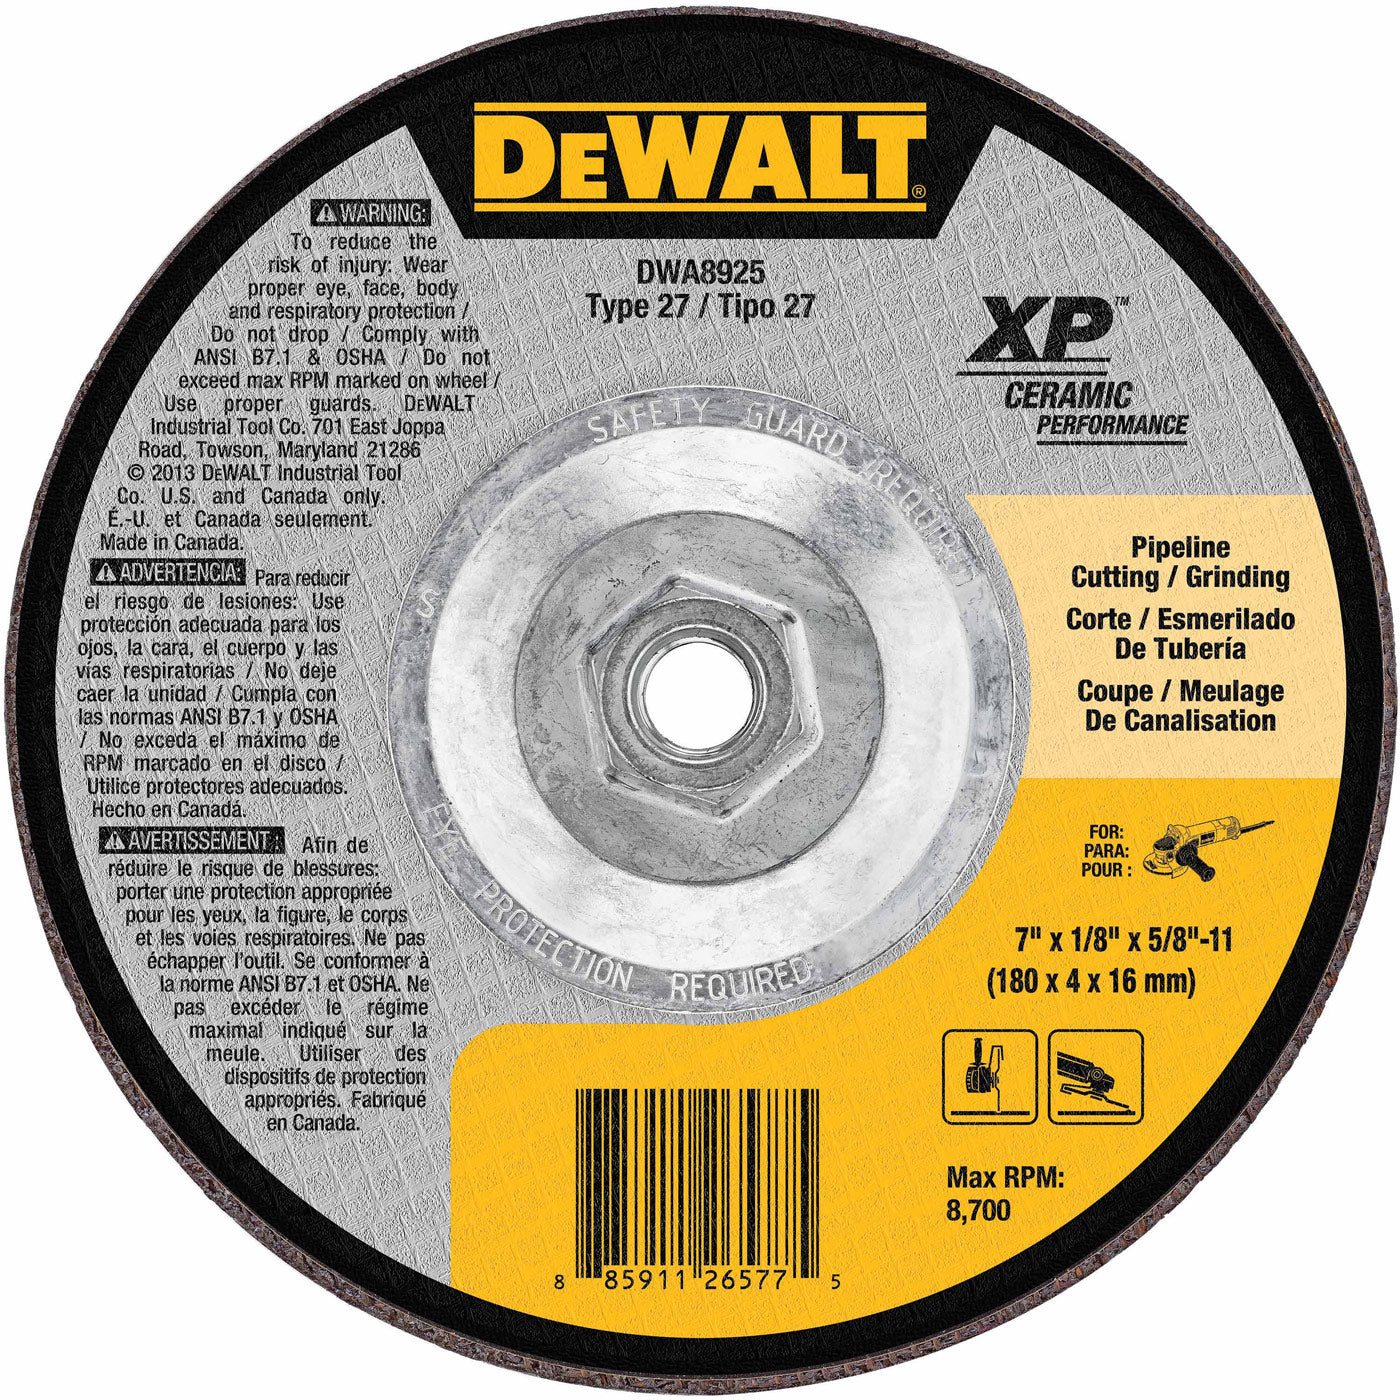 DeWalt DWA8925 7" x 1/8" x 5/8"-11 Ceramic Abrasive Grinding Disk